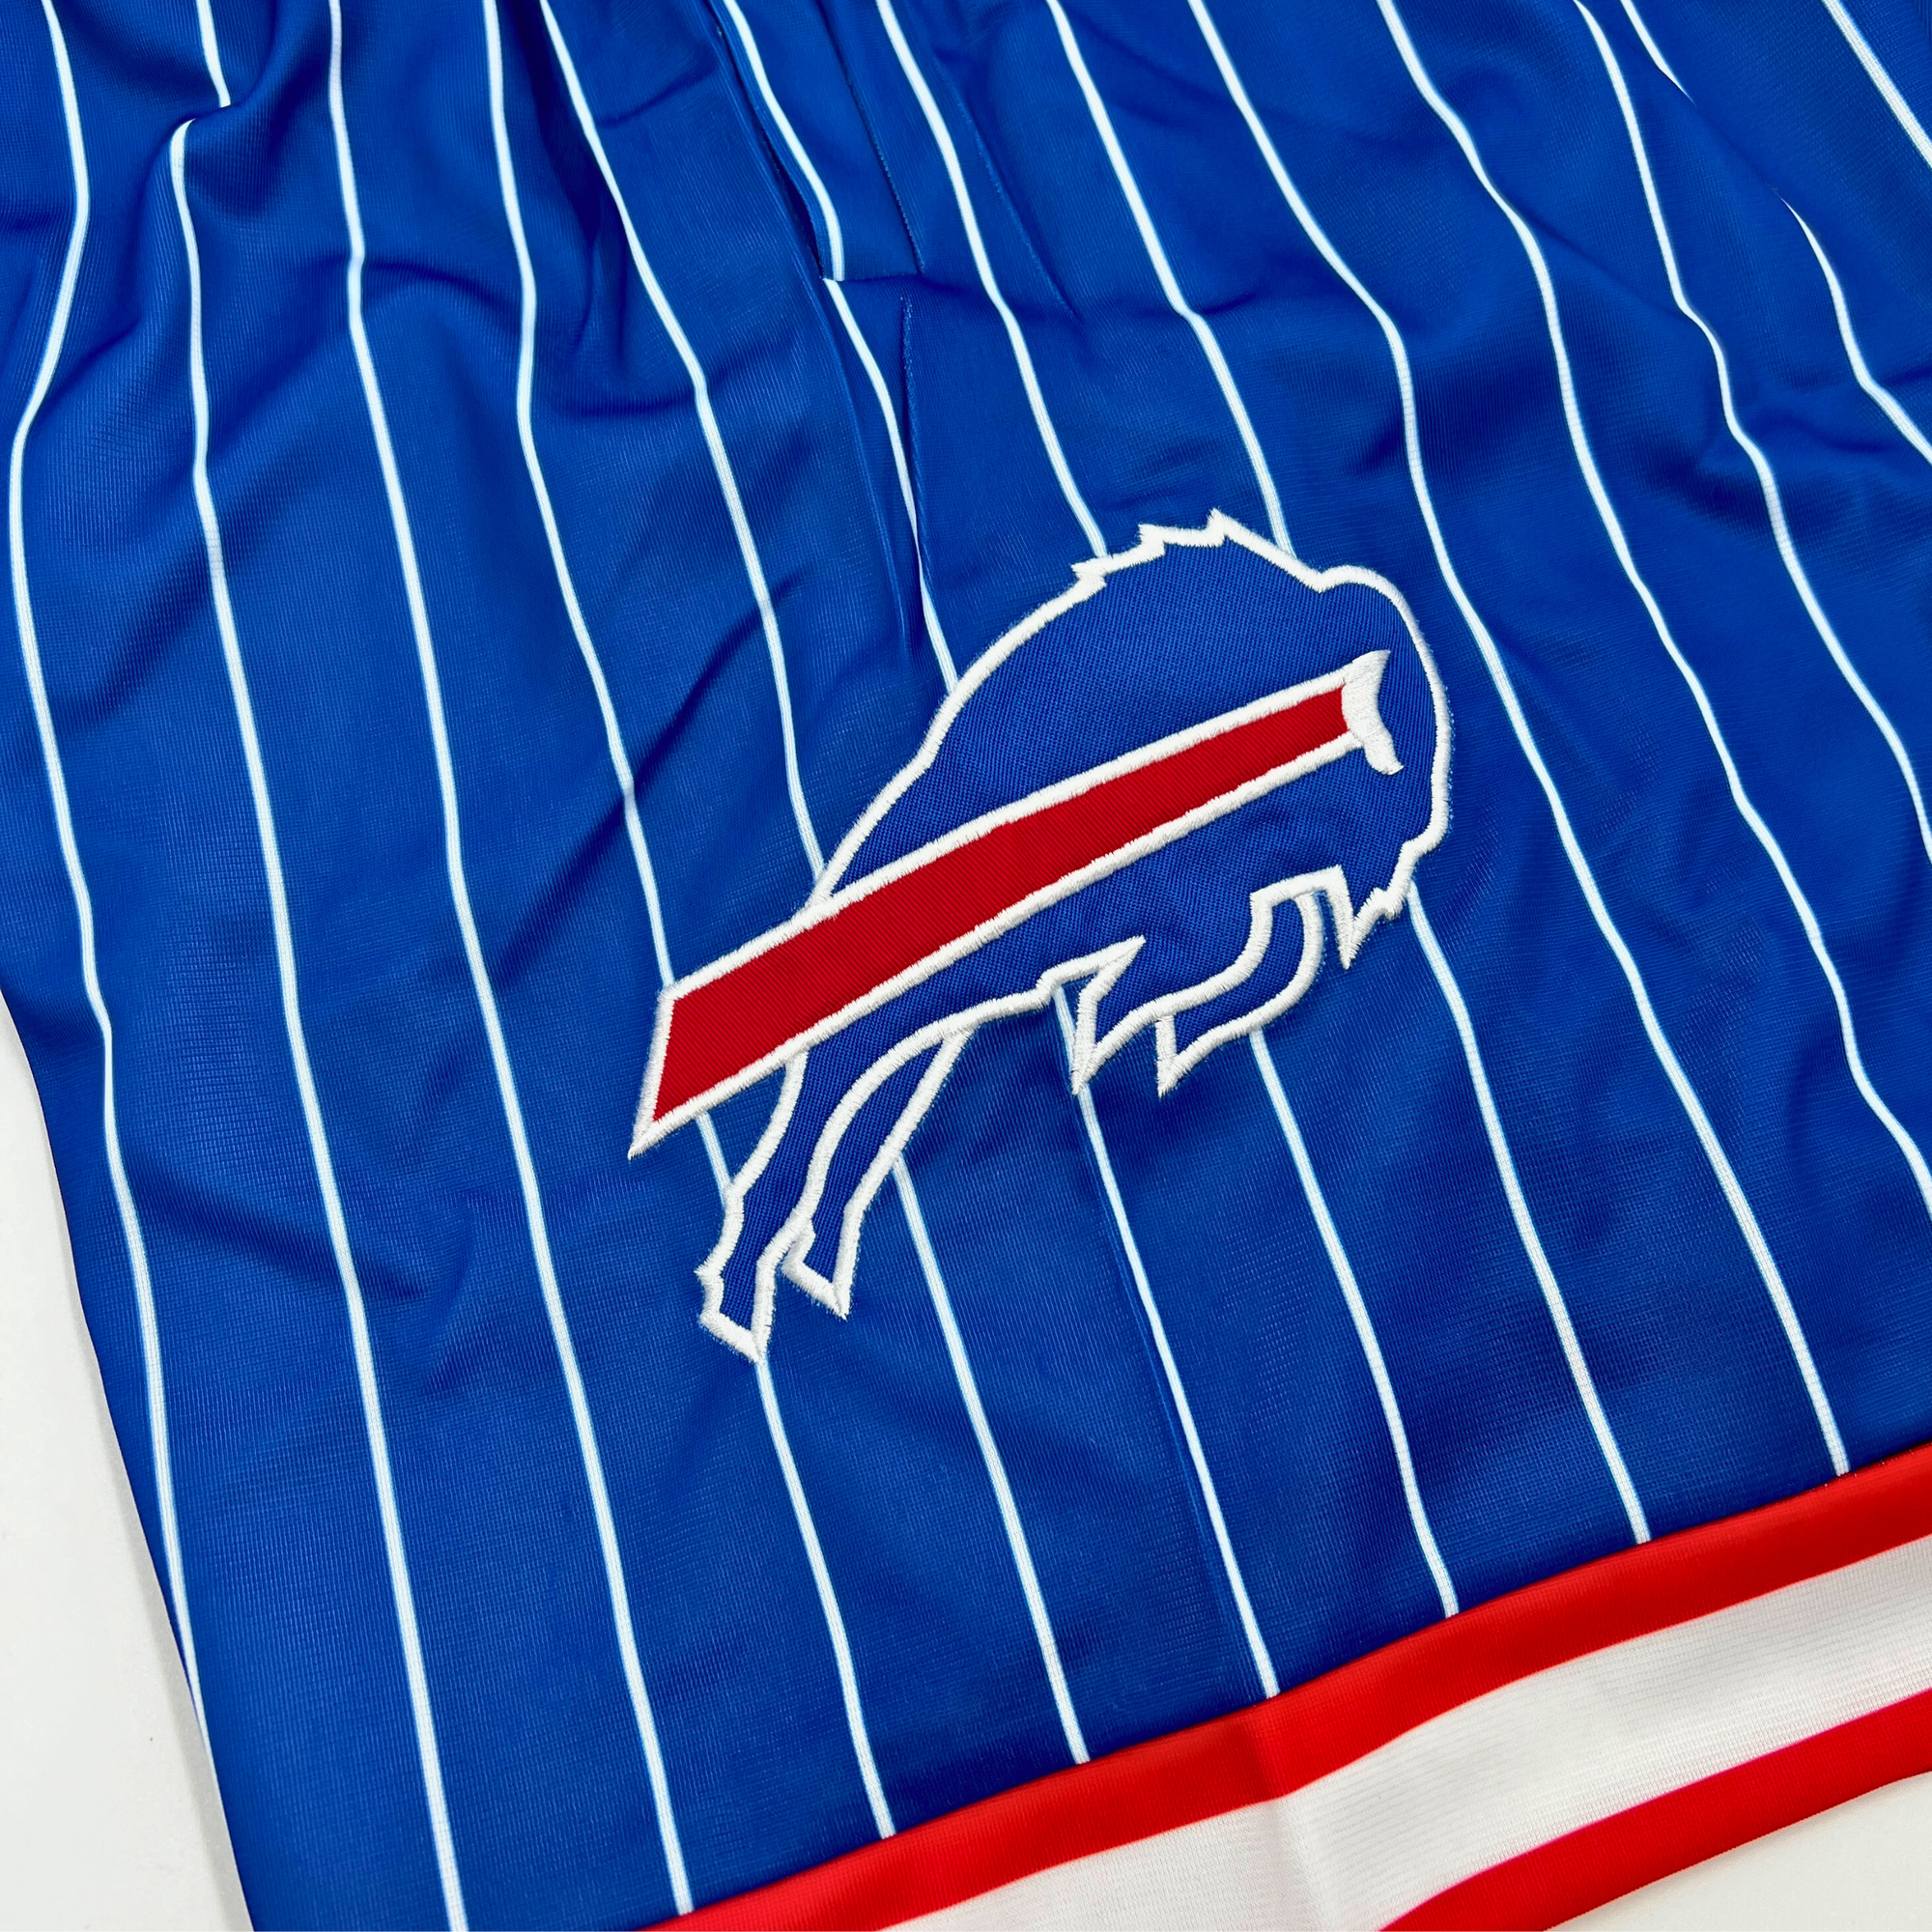 Buffalo Bills Double Logo Pinstripe Royal Shorts